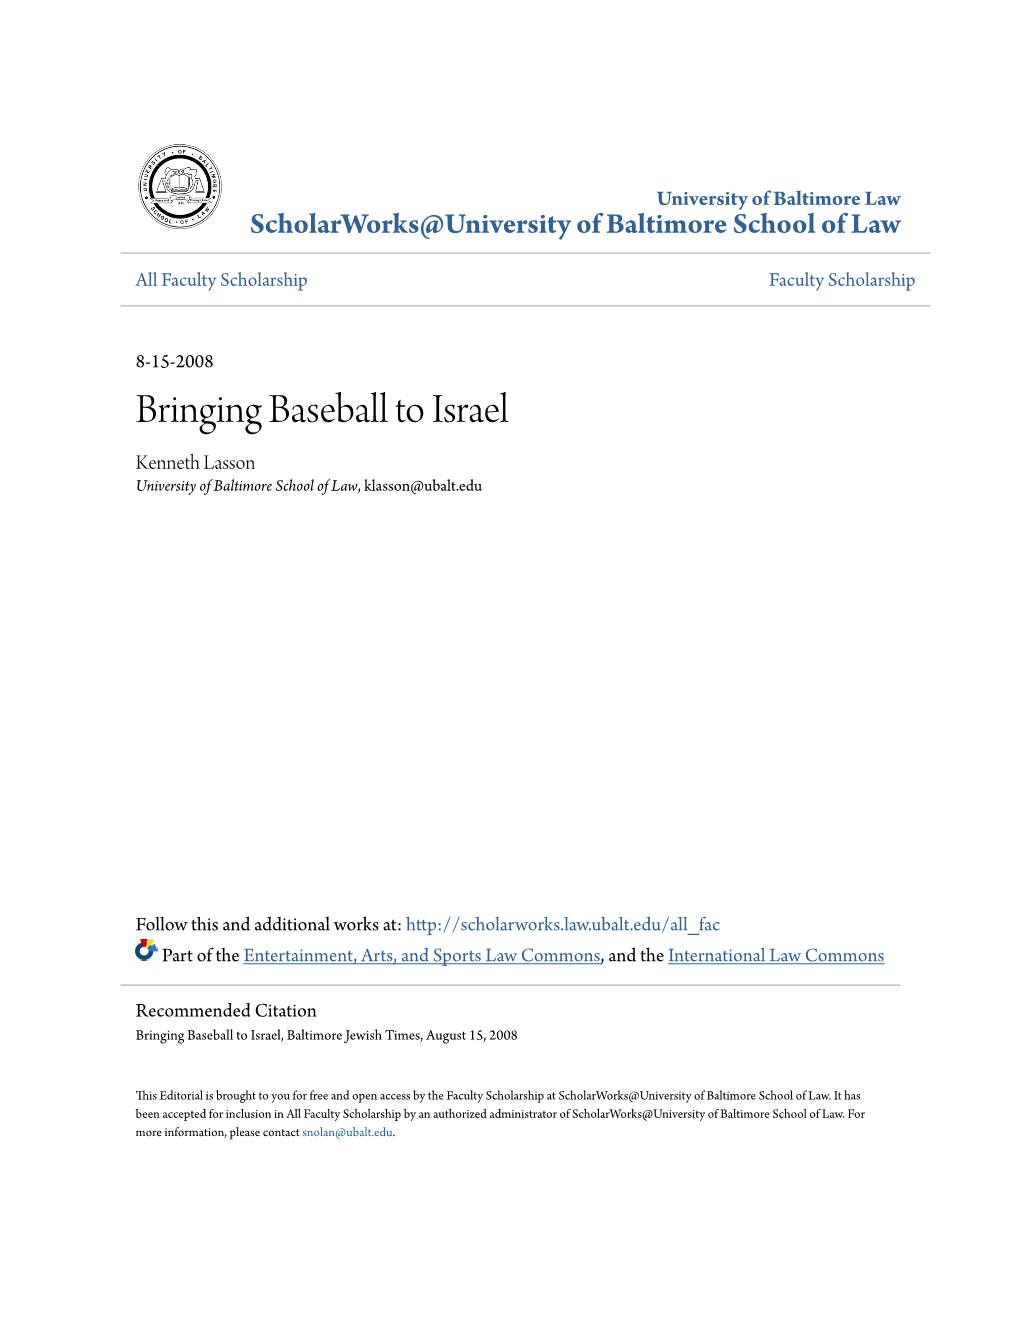 Bringing Baseball to Israel Kenneth Lasson University of Baltimore School of Law, Klasson@Ubalt.Edu